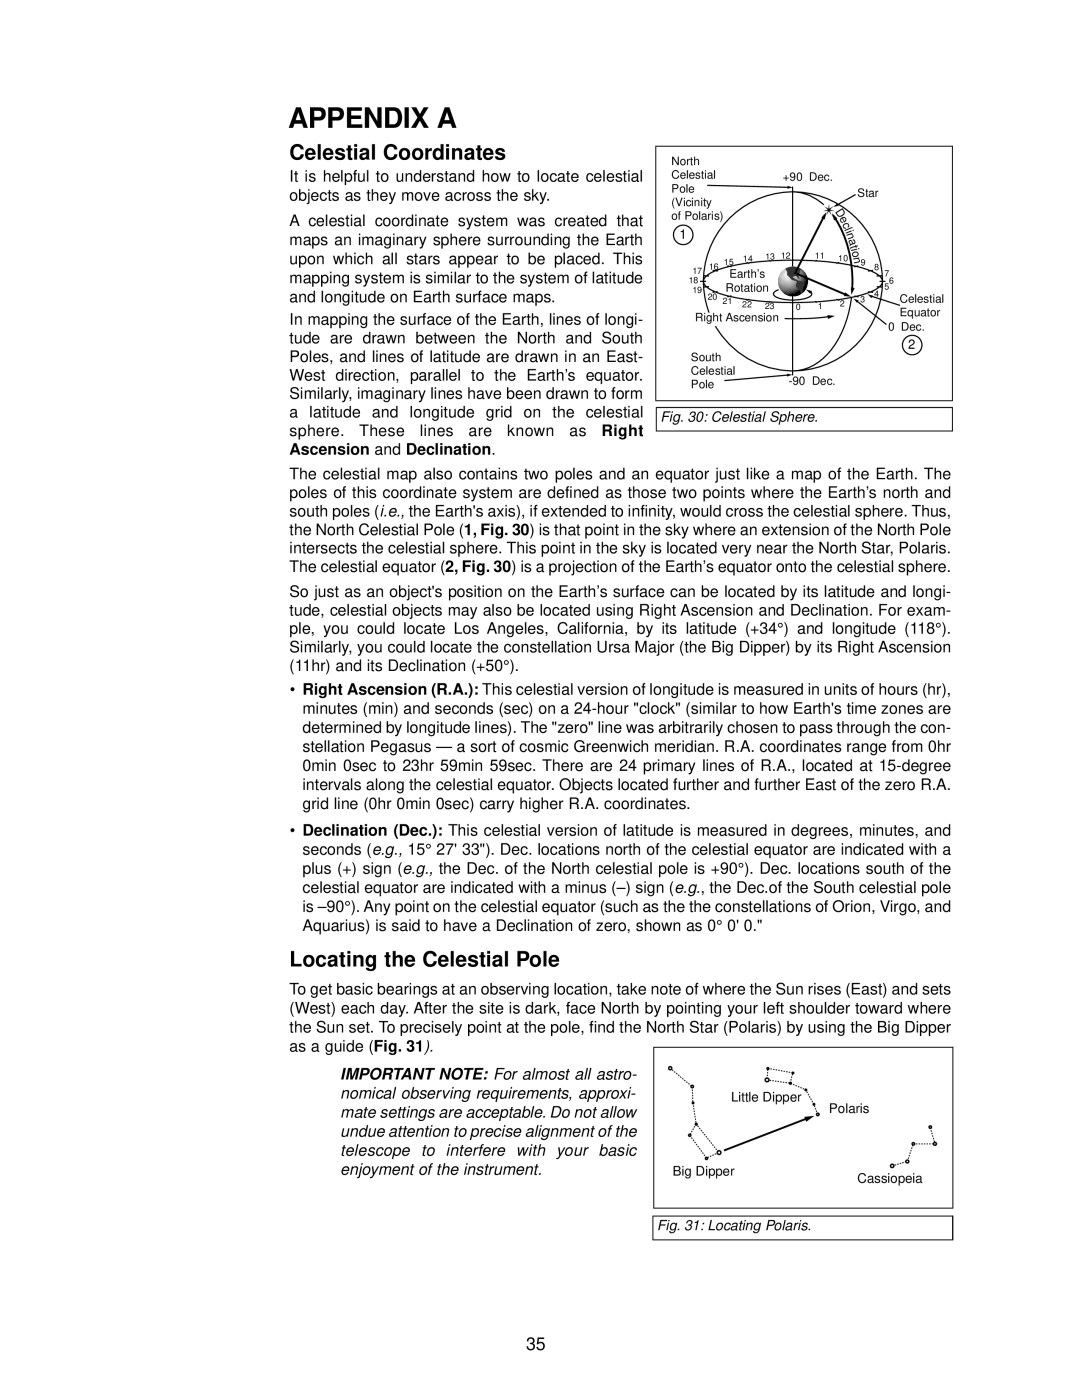 Meade DS-2000 instruction manual Appendix A, Celestial Coordinates, Locating the Celestial Pole 